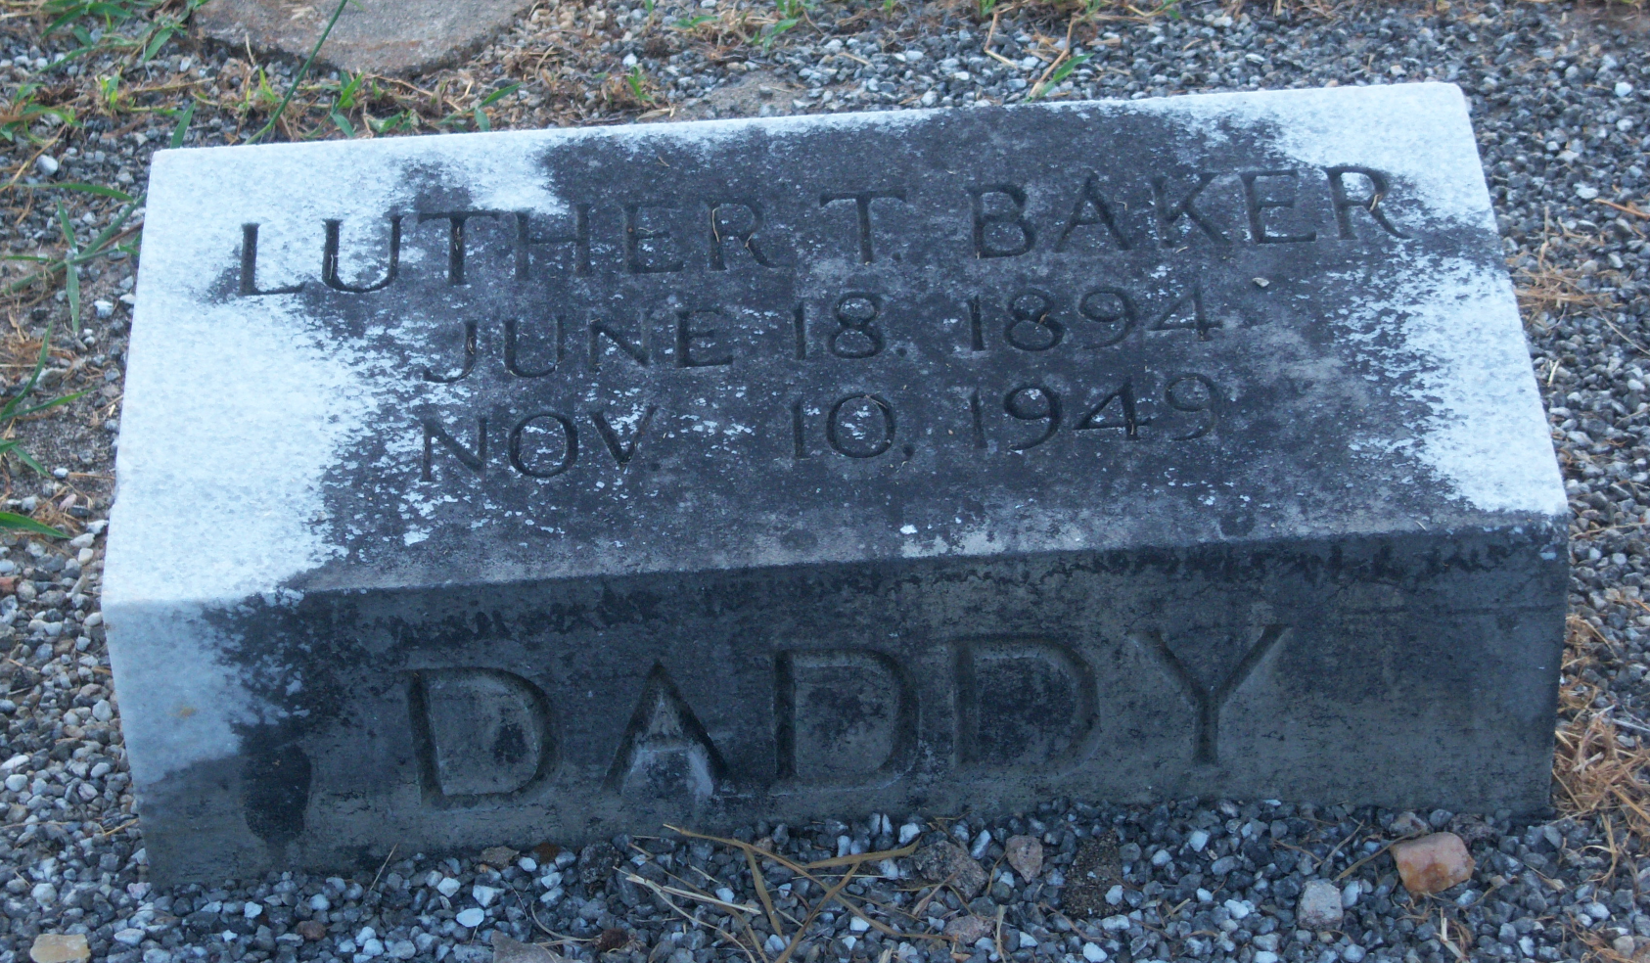 LutherTroupBaker gravestone